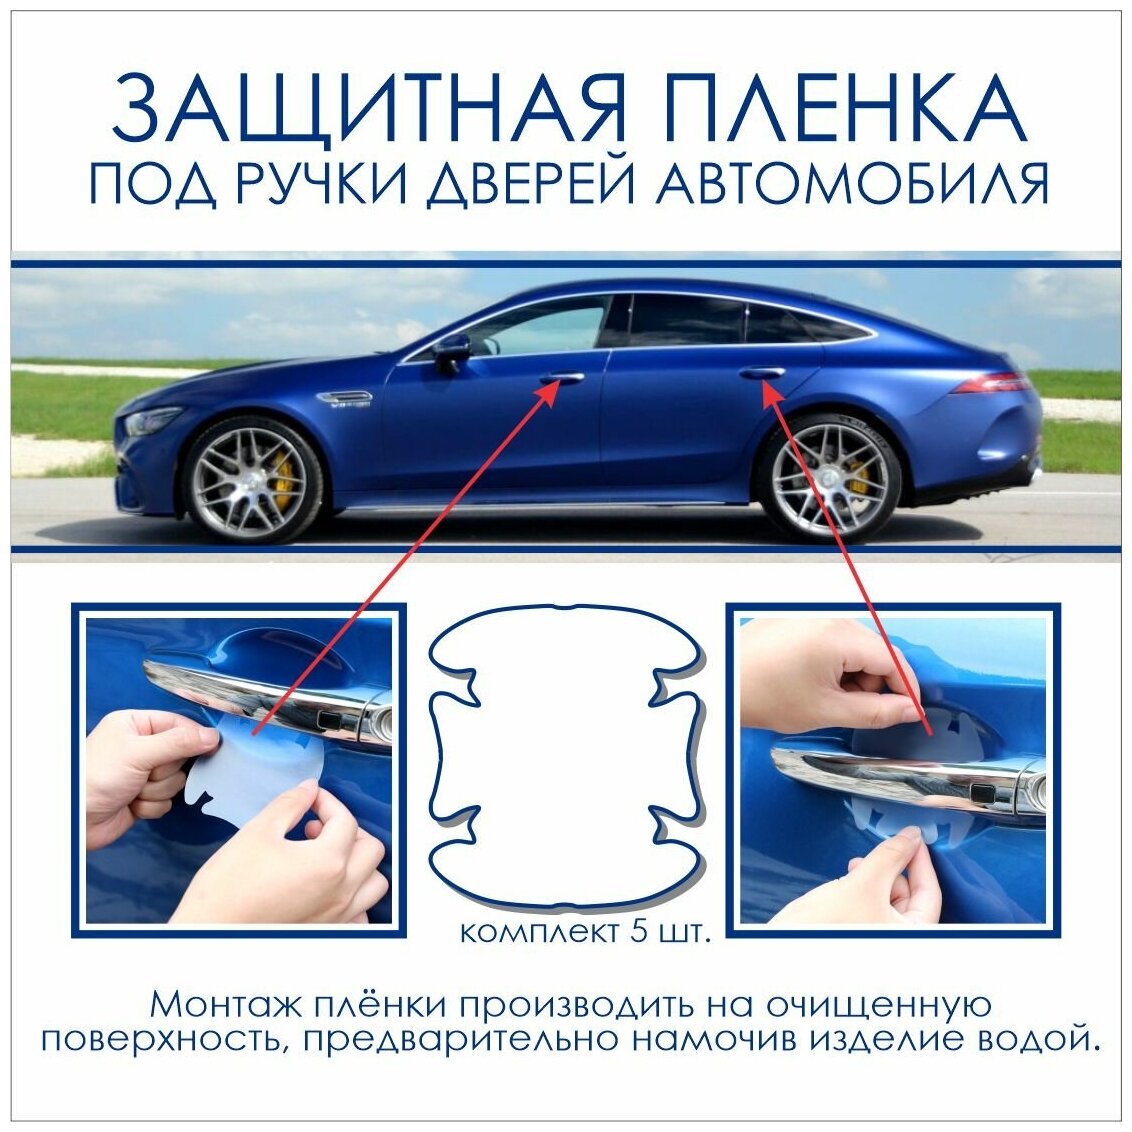 Защитная пленка под ручки дверей автомобиля (на ВСЕ виды авто)(ком. 5 шт) пленка POLI-PRINT прозрачная бронь